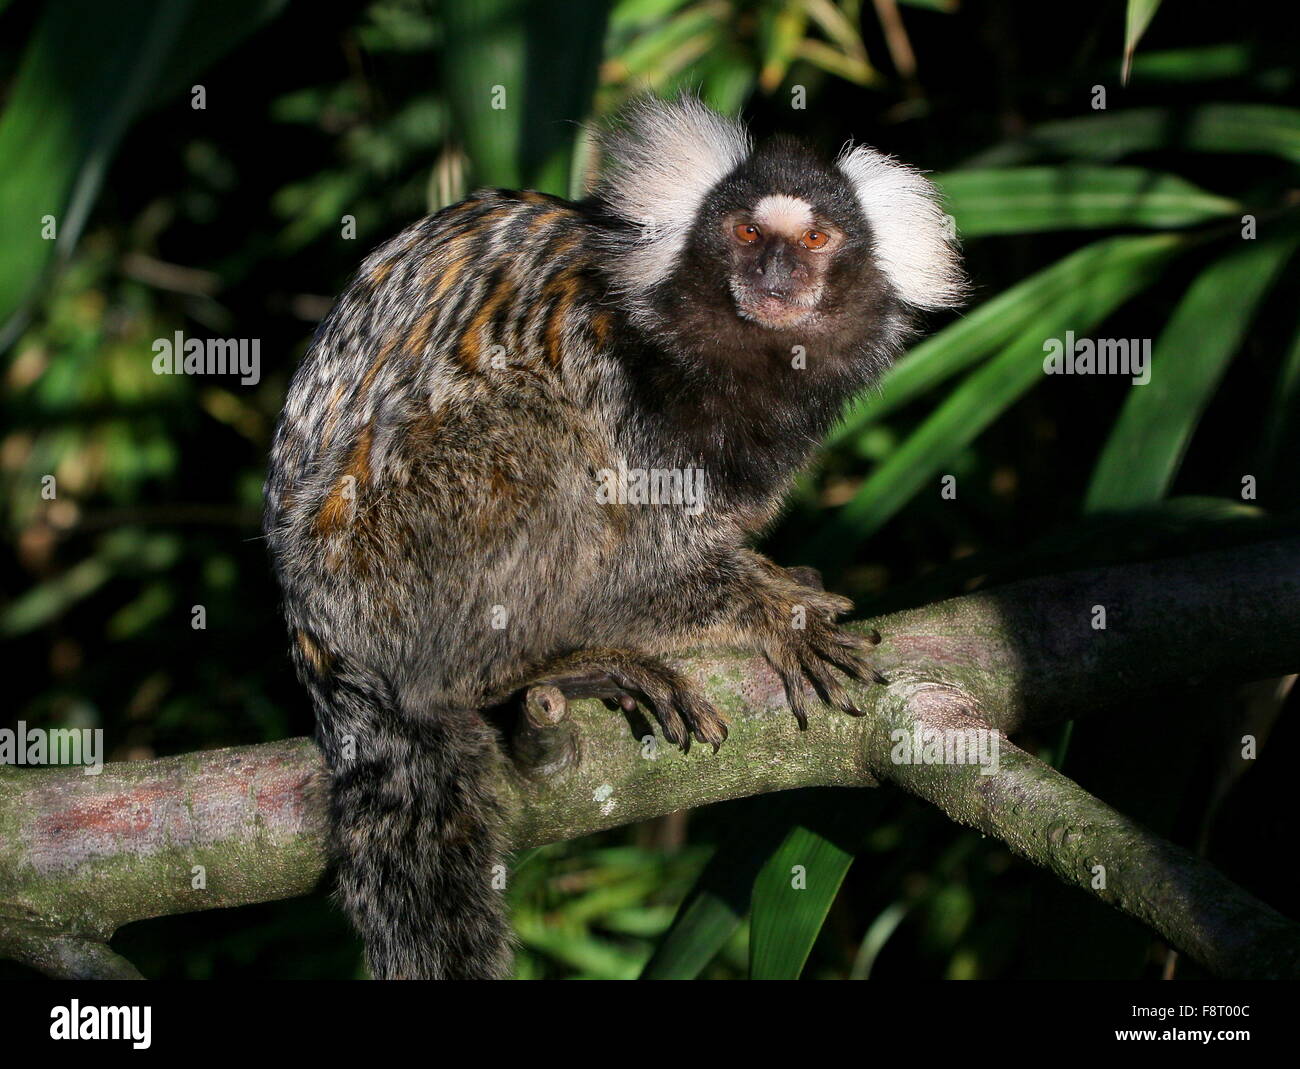 Brazilian Common marmoset (Callithrix jacchus) in a tree, facing the camera Stock Photo